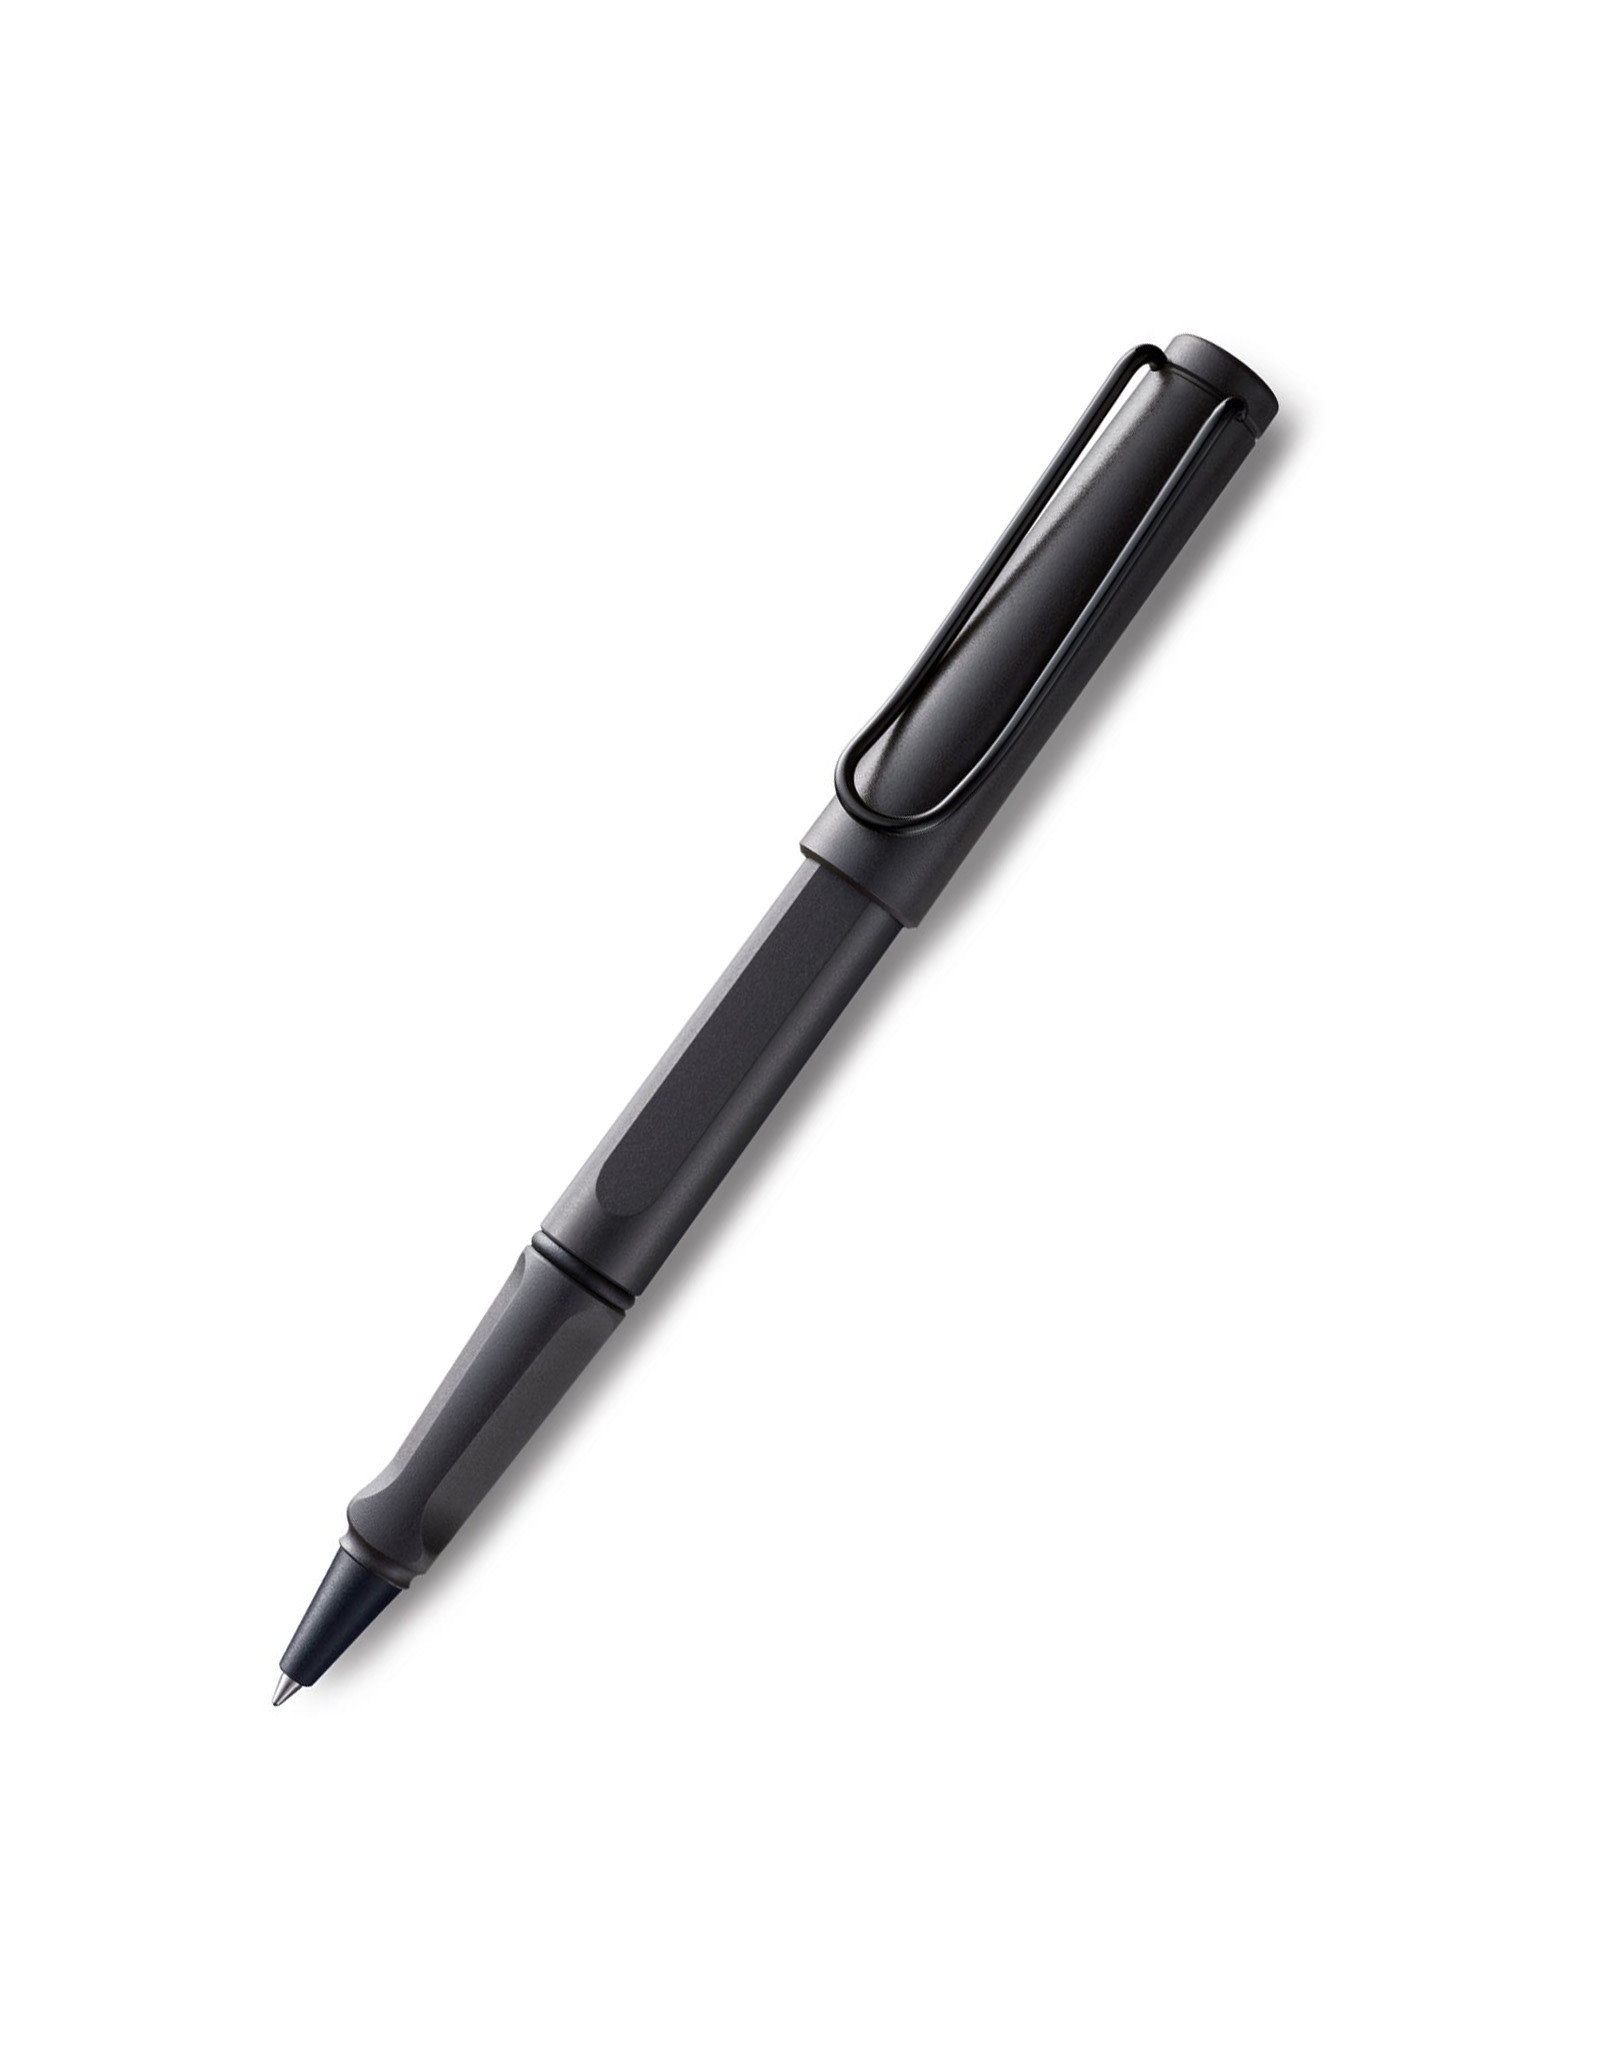 LAMY LAMY Safari Ballpoint Pen, Charcoal